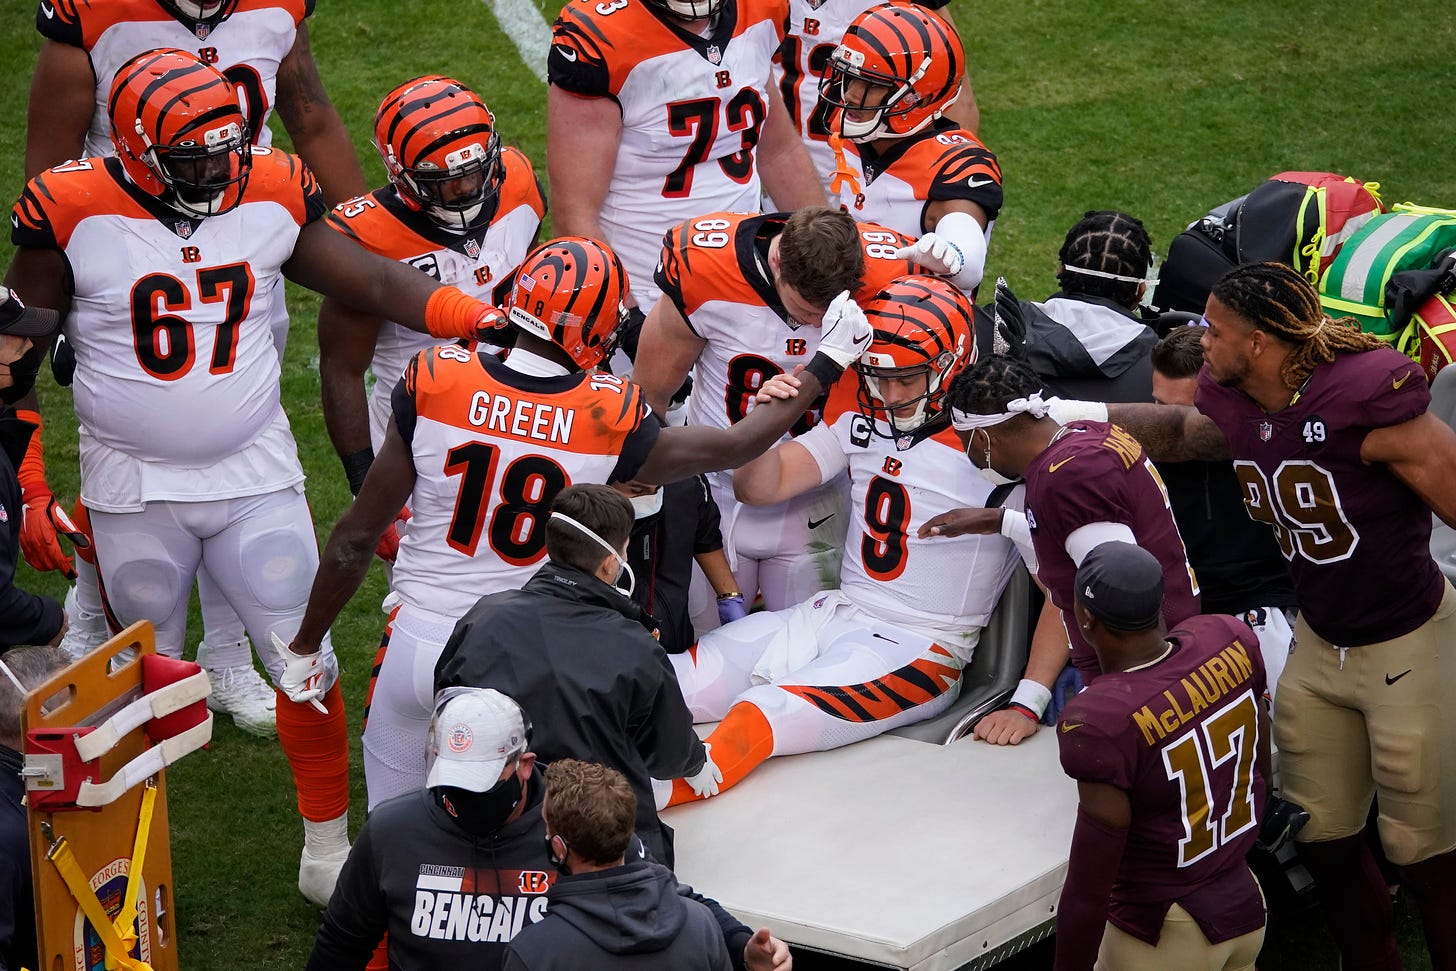 NFL seeing rash of quarterback injuries - Washington Times